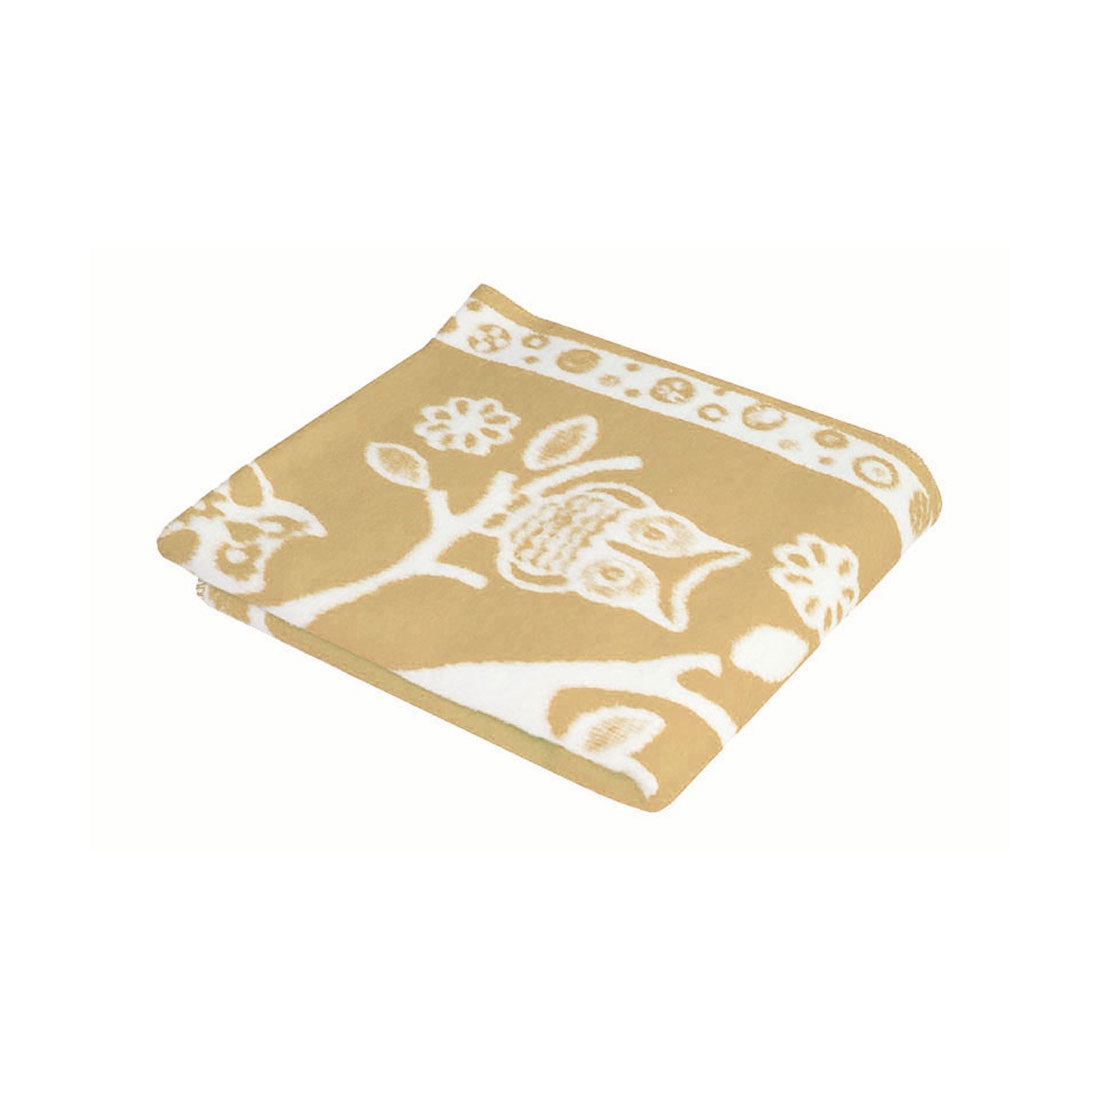 Детское одеяло Совушки цвет: бежевый Теплое (100х140 см)